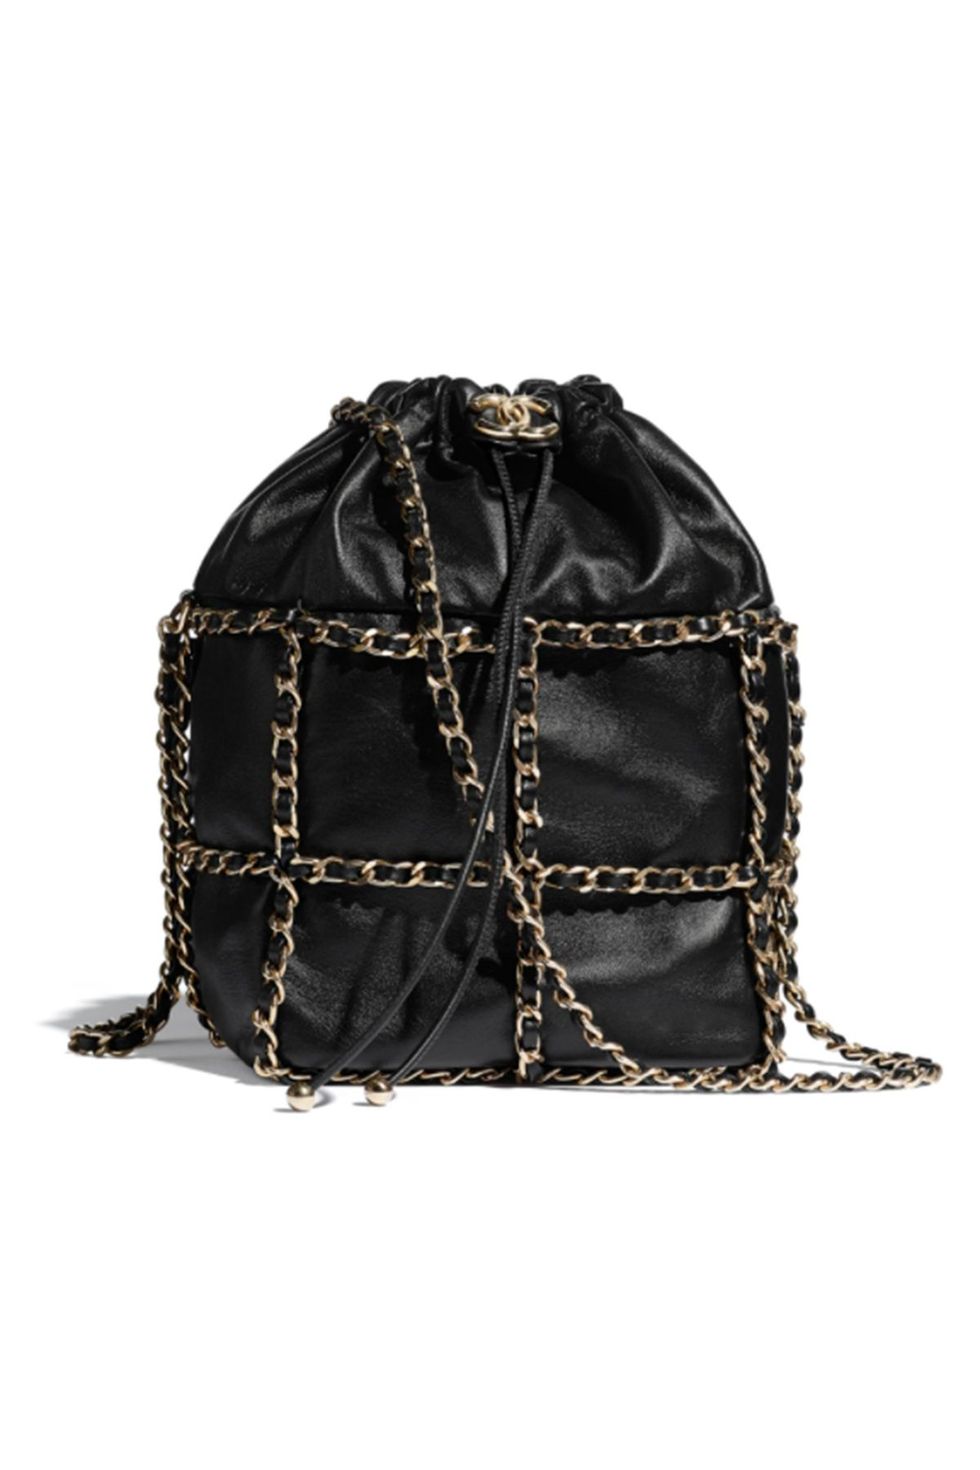 medium black chanel bag vintage